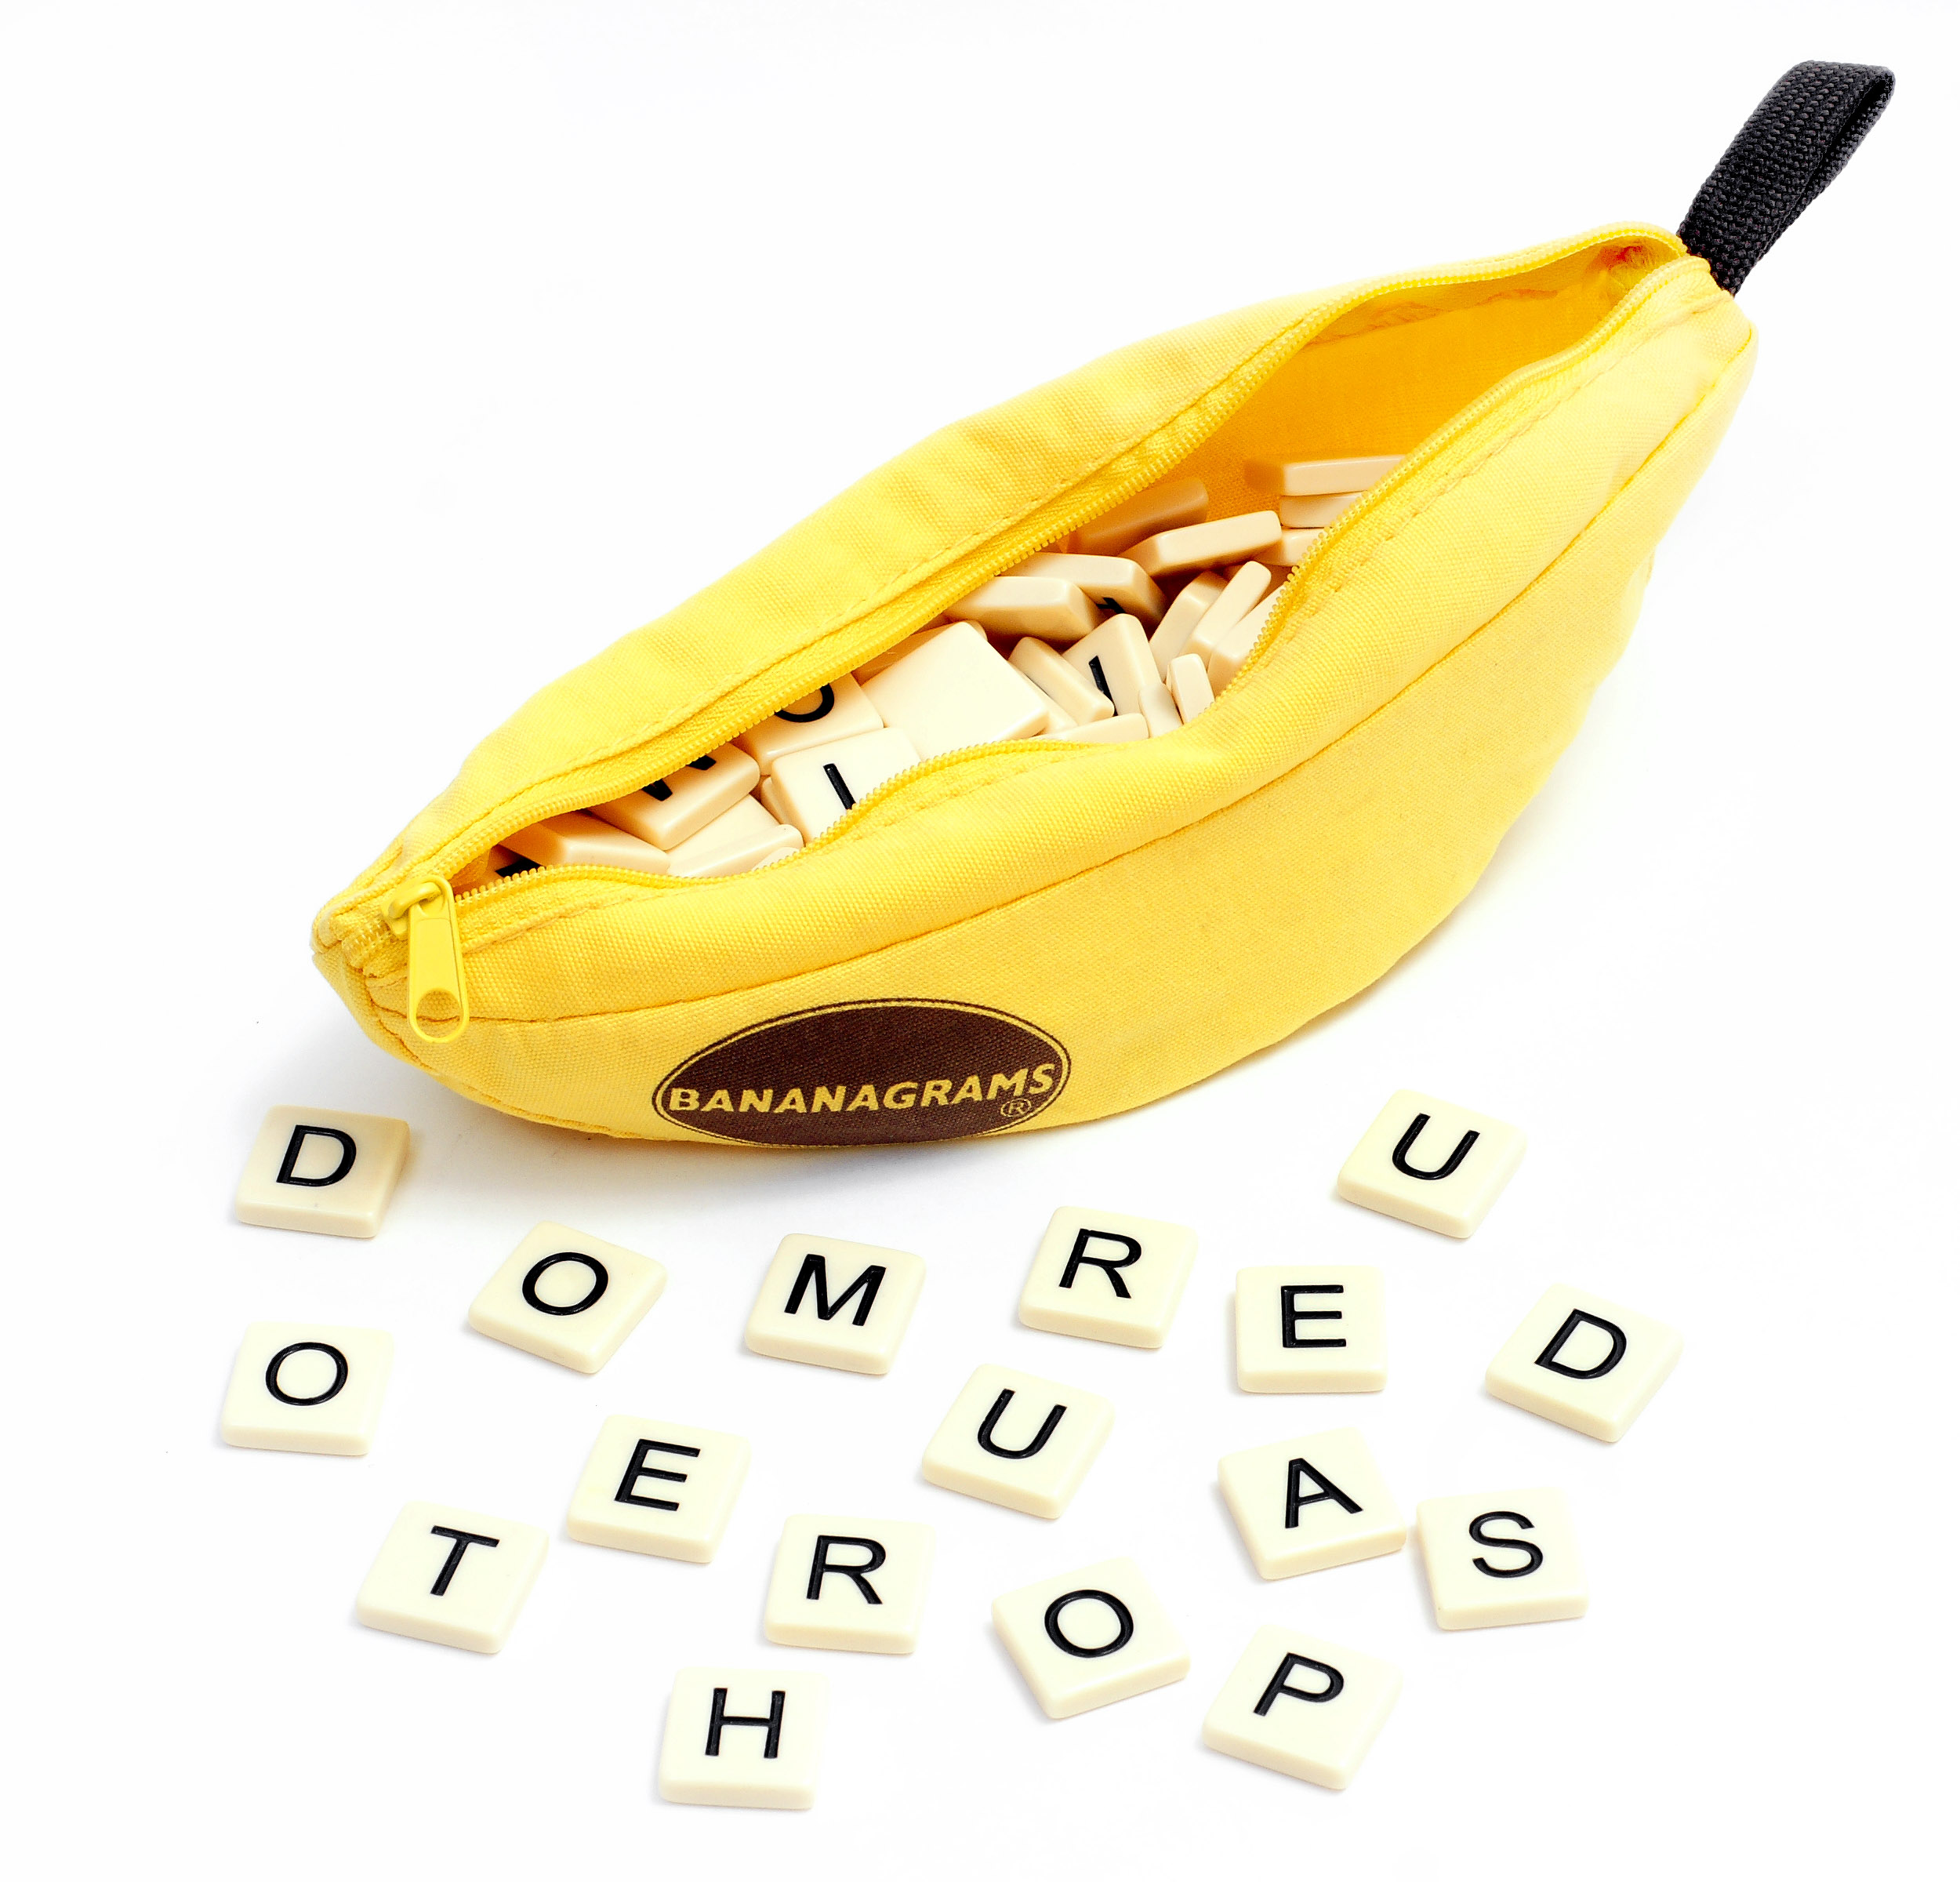 Bananagrams Wikipedia